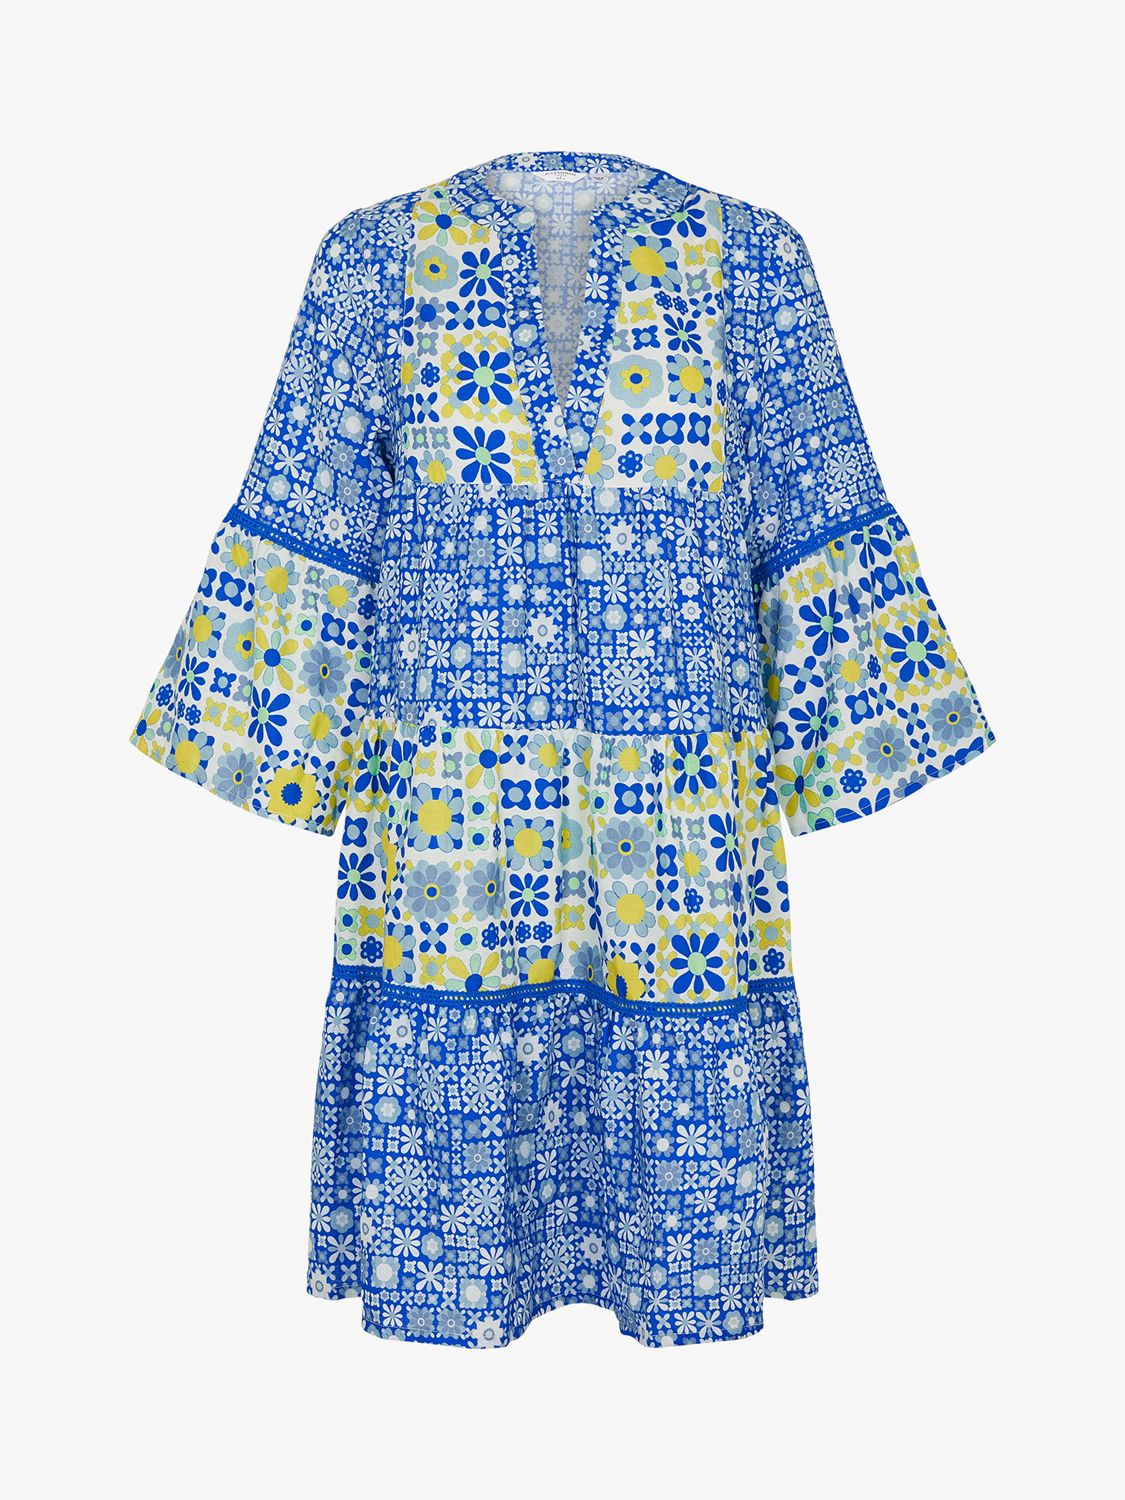 Accessorize Retro Tile Print Mini Dress, Blue/Multi, XS